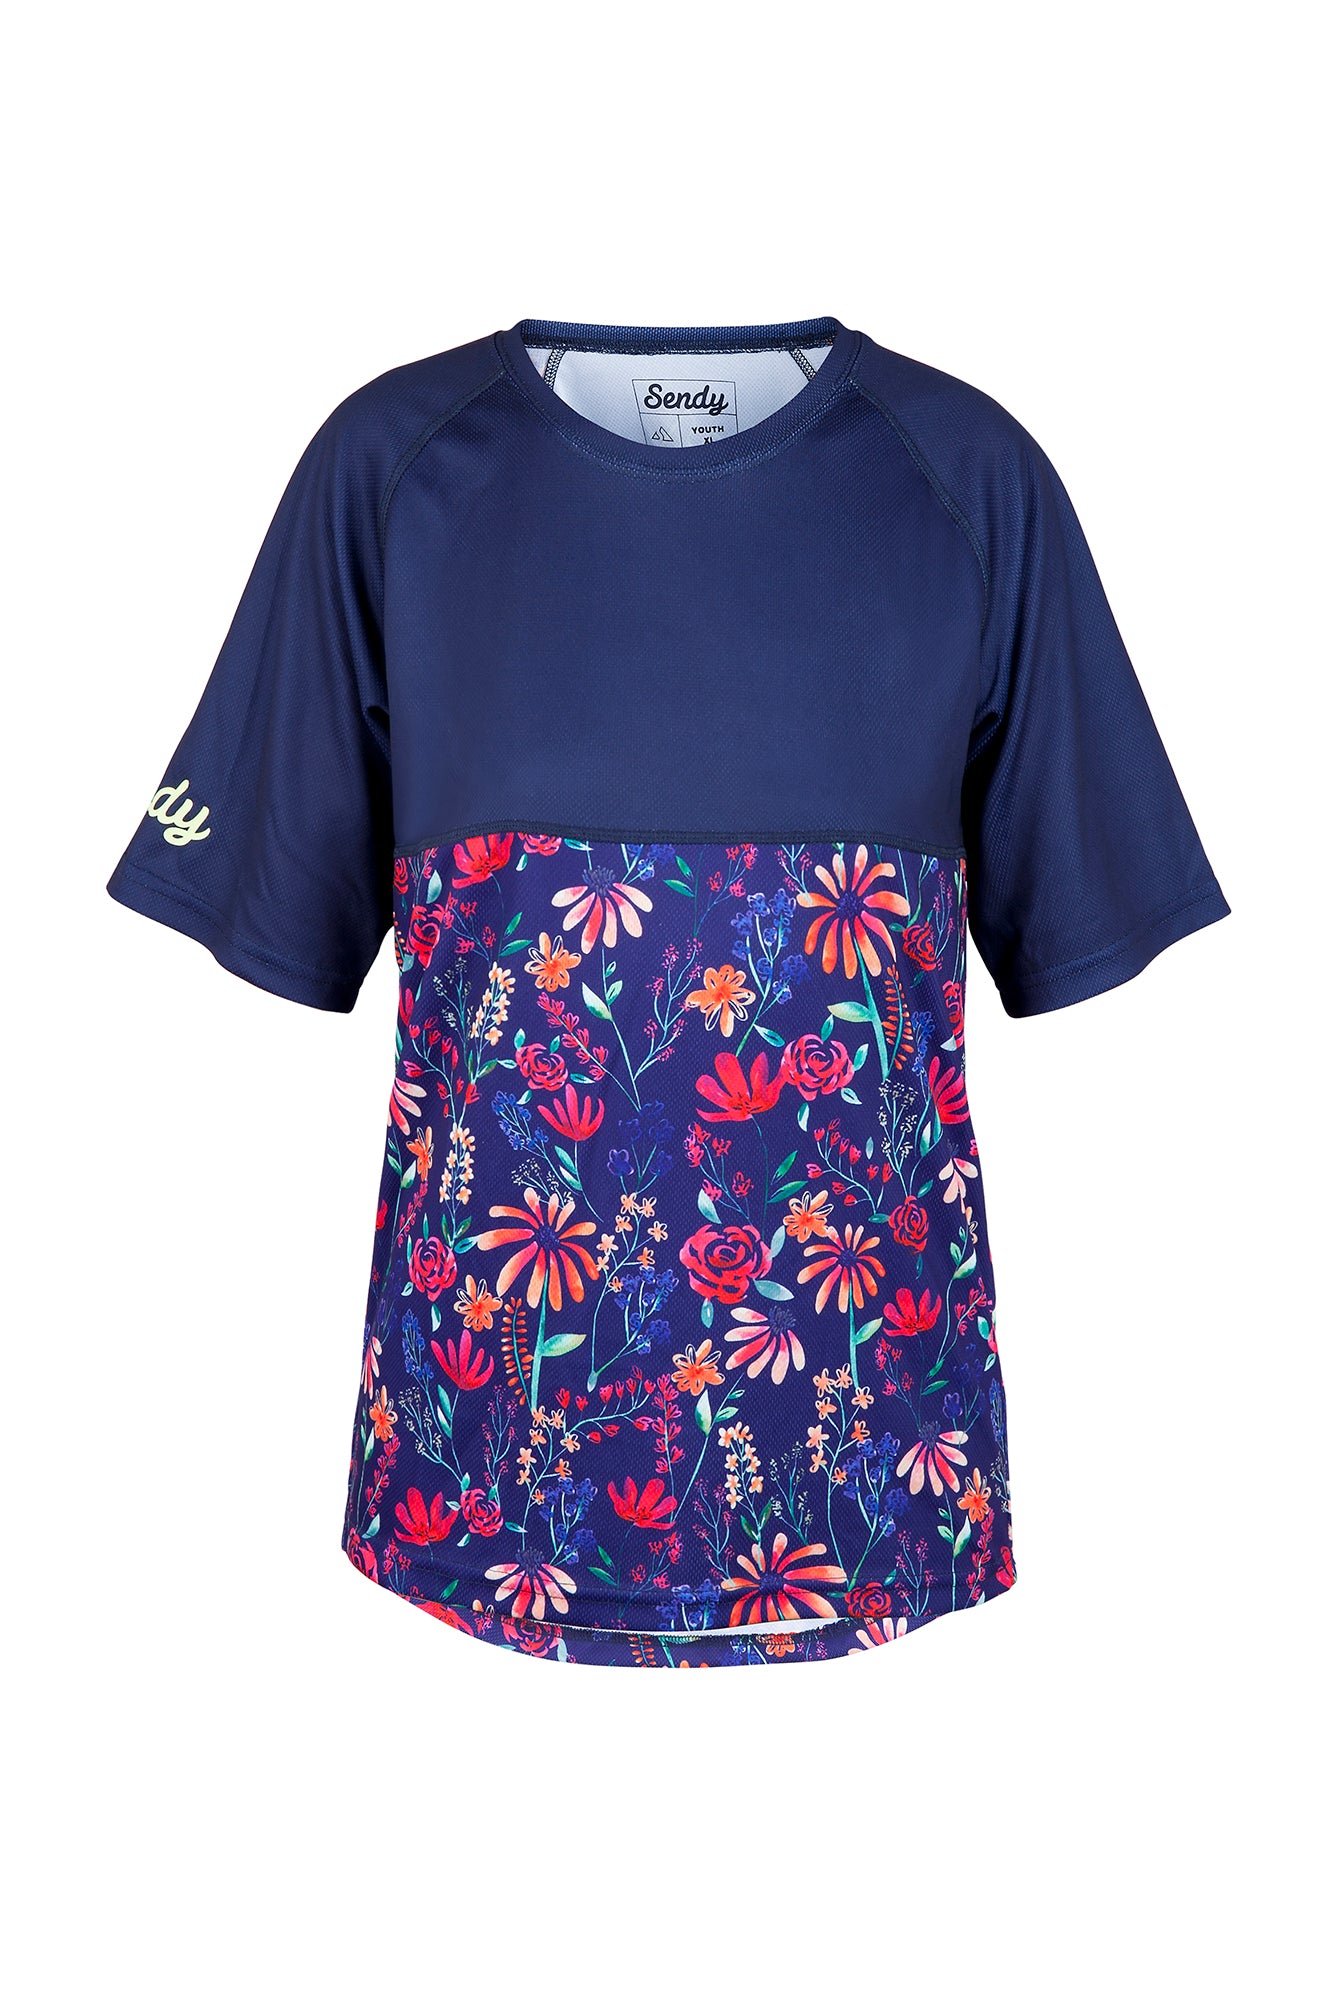 Send It Kids Short Sleeved MTB Jersey | The Wildflower